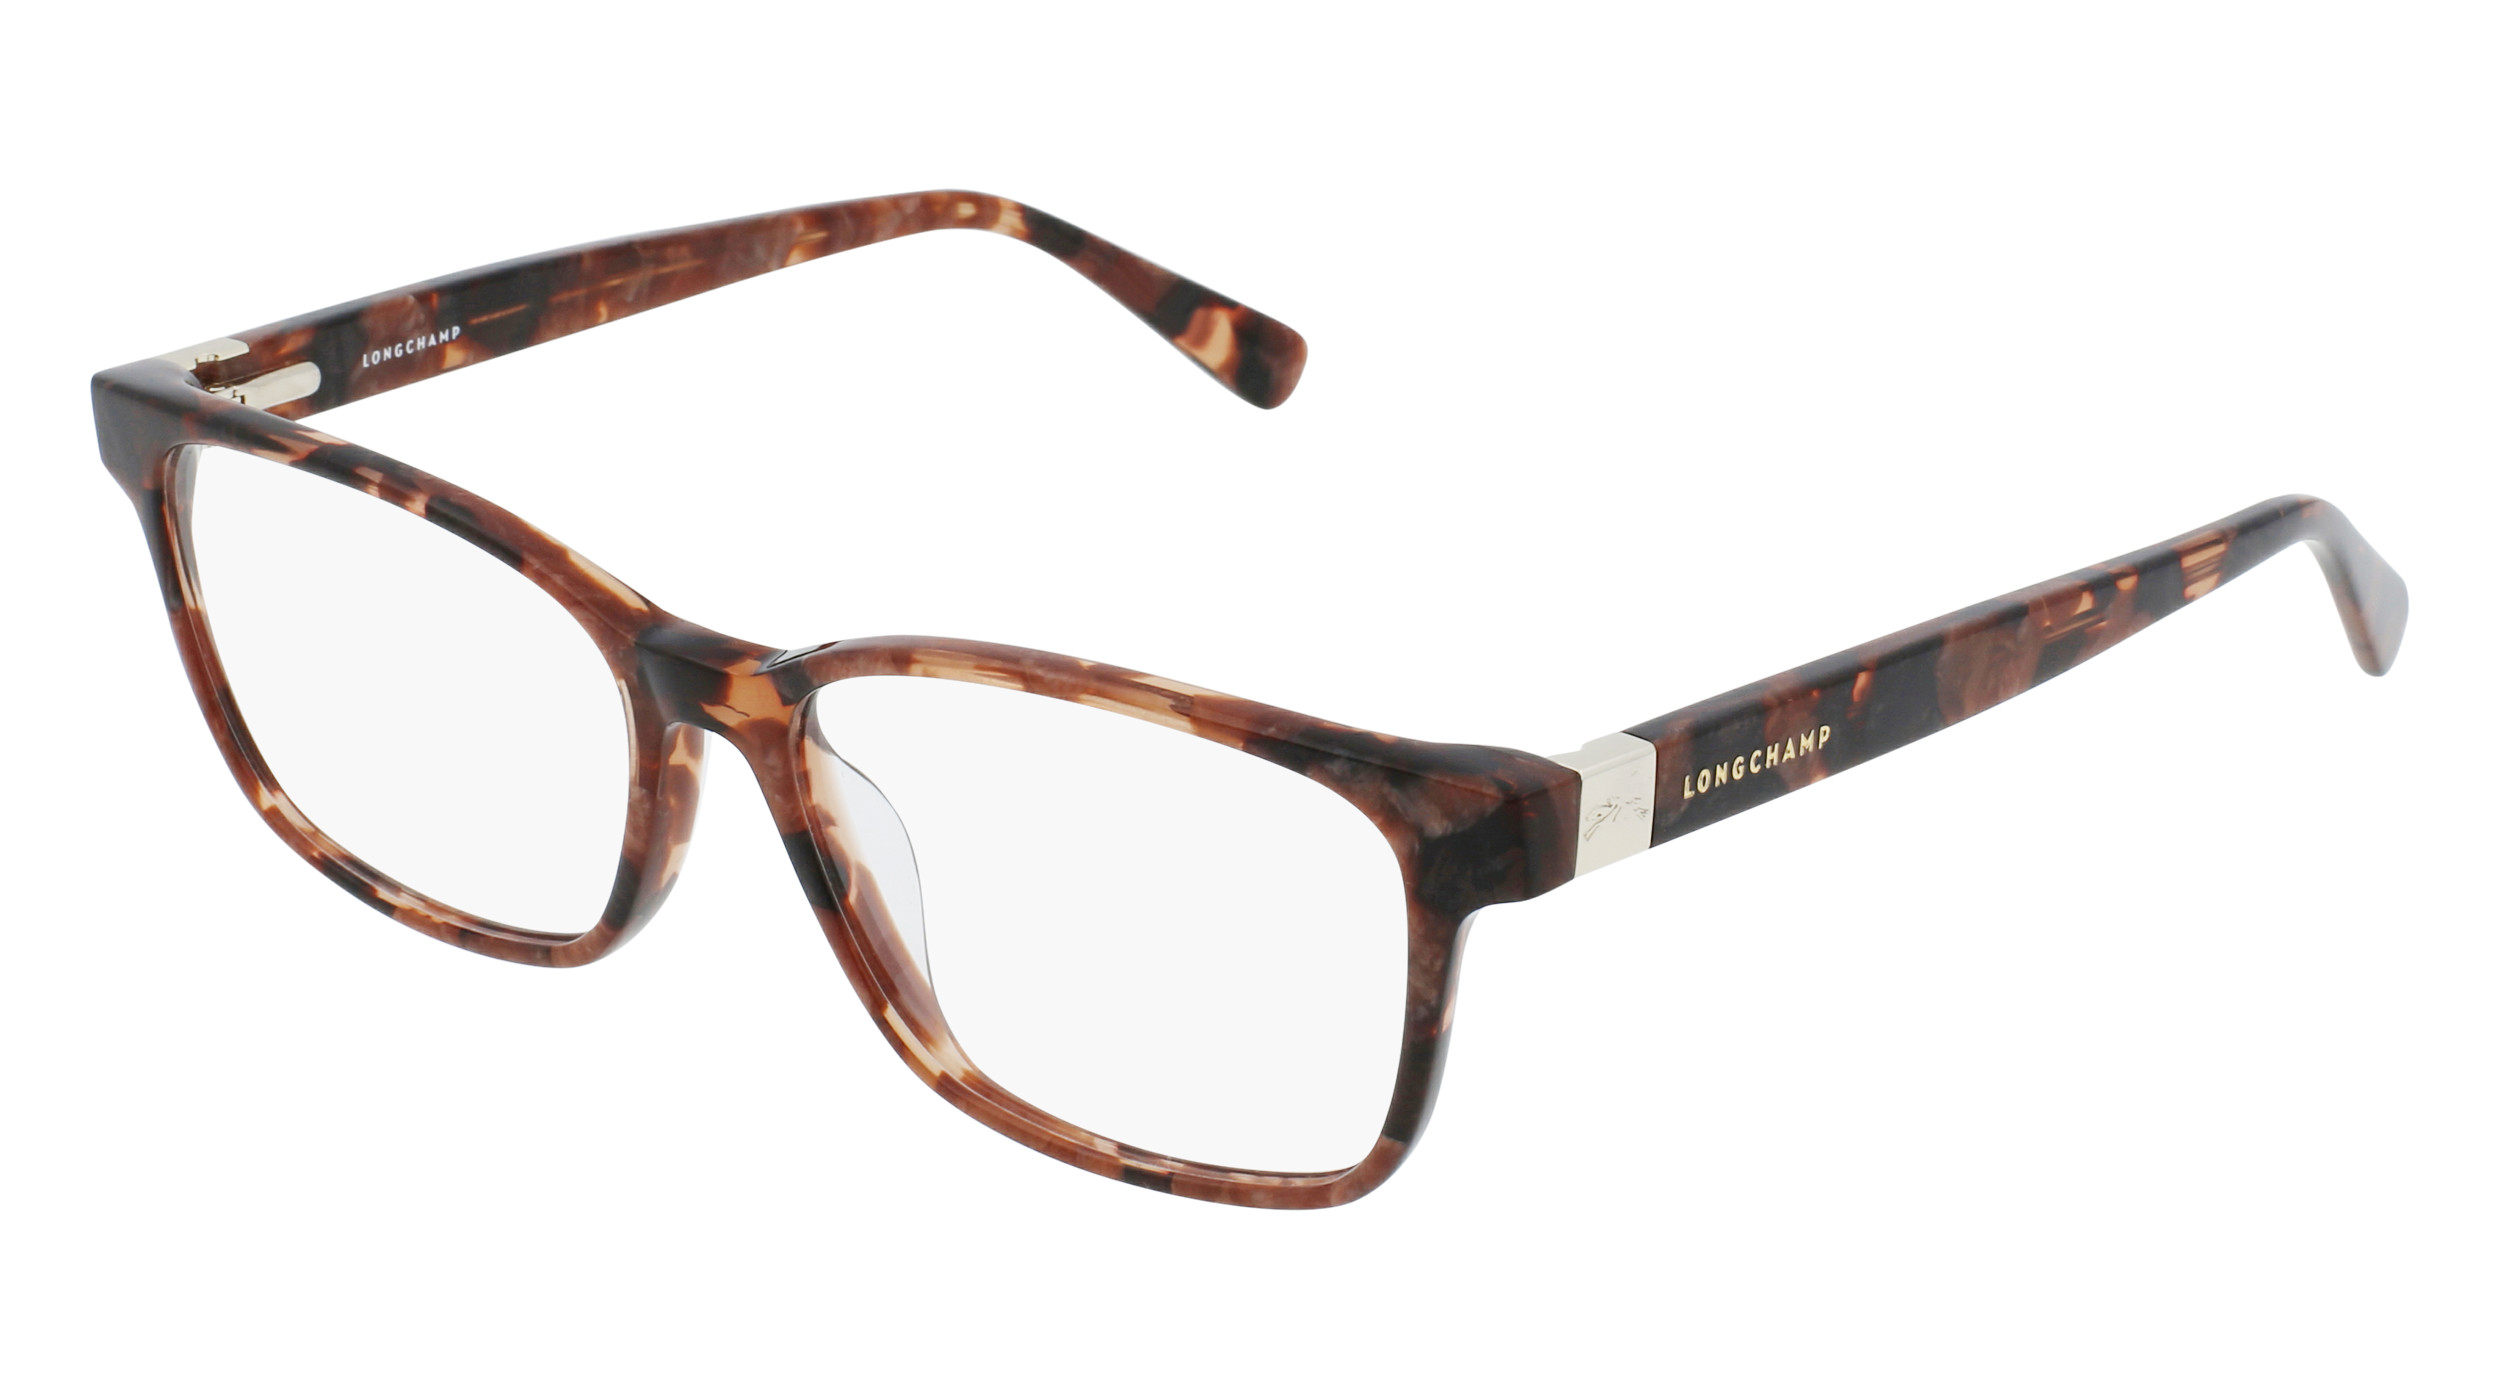 Longchamp Tart Colored Eyeglasses By G&M Eyecare